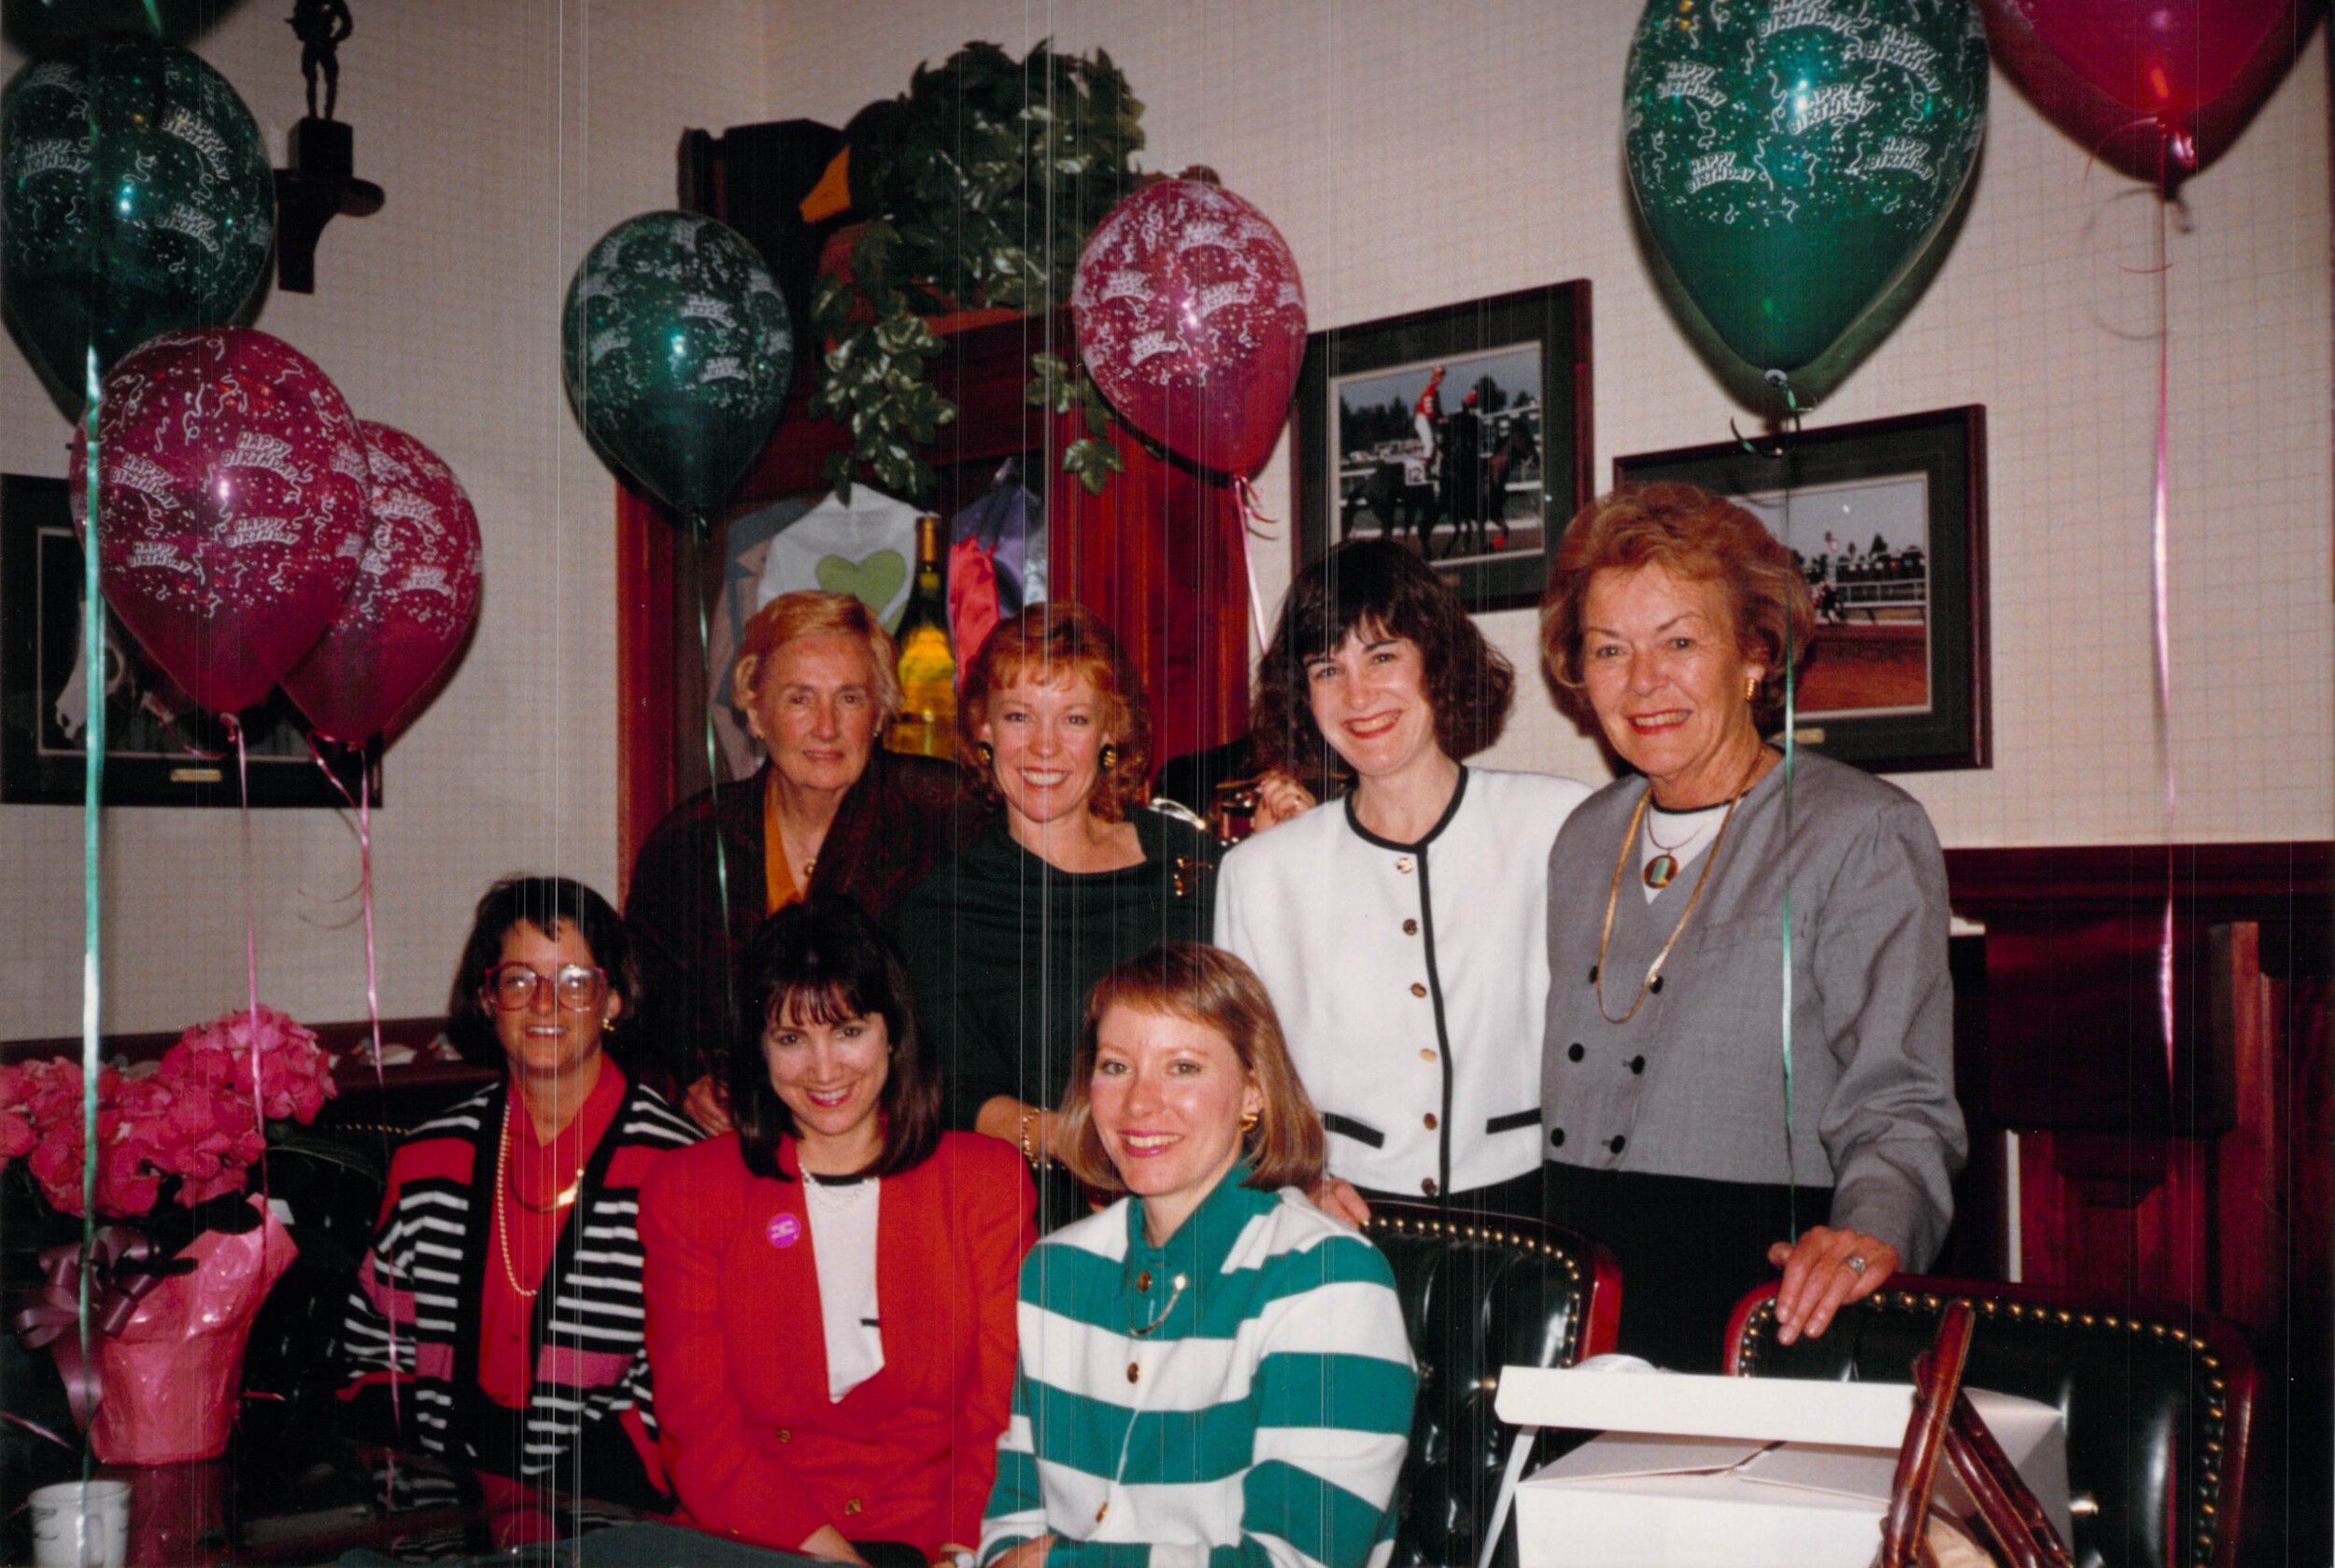 1998-1990_13 Aunt, Dealice Drommenhausen, Gill Sullivan, Kathryn's mom, Liz Sippl, Kathryn Dily Herb, Susan Rife.jpg